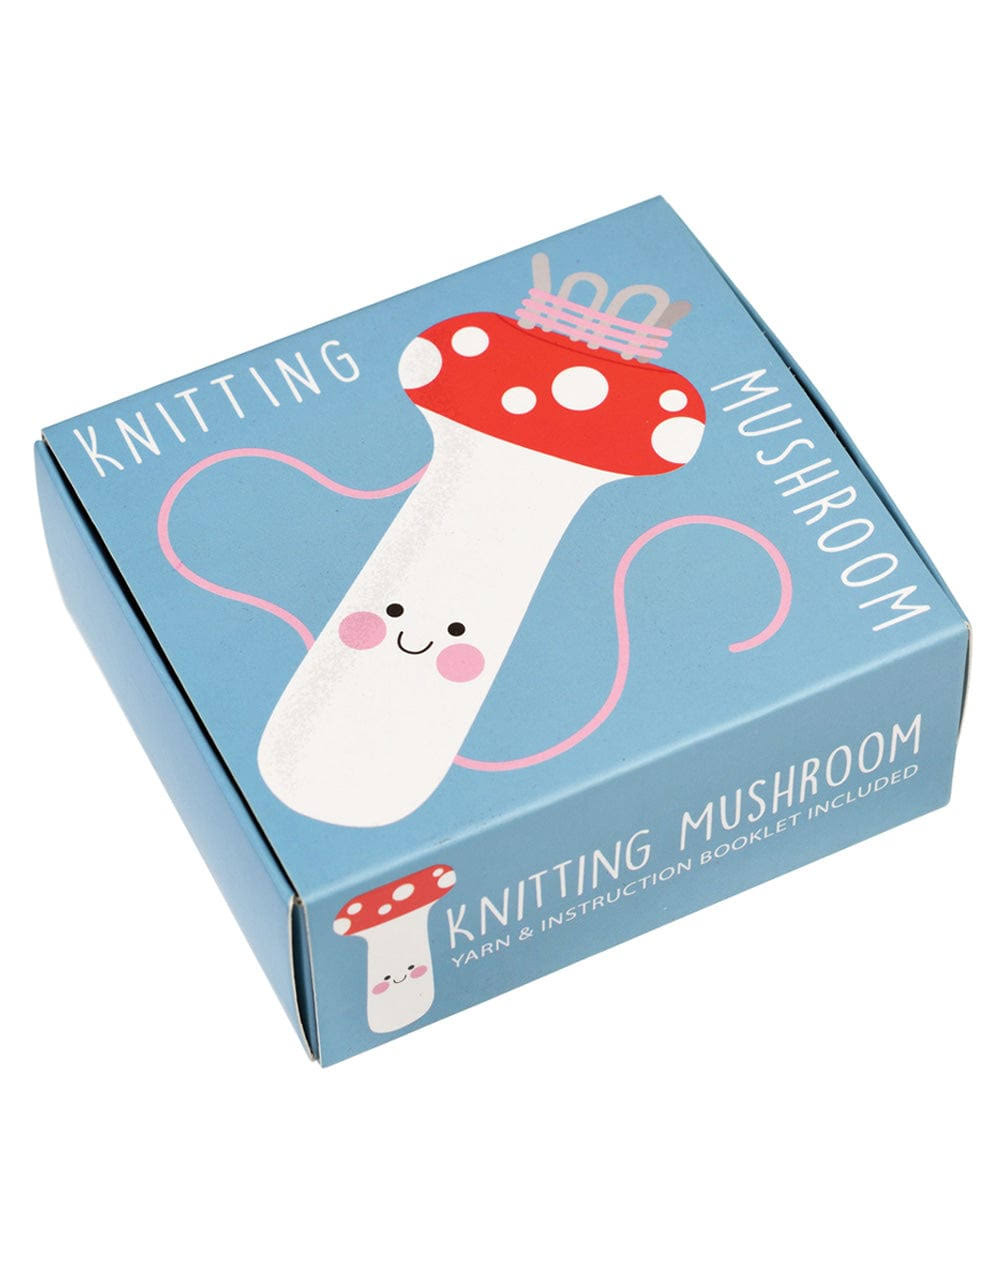 Rex London - Knitting Mushroom